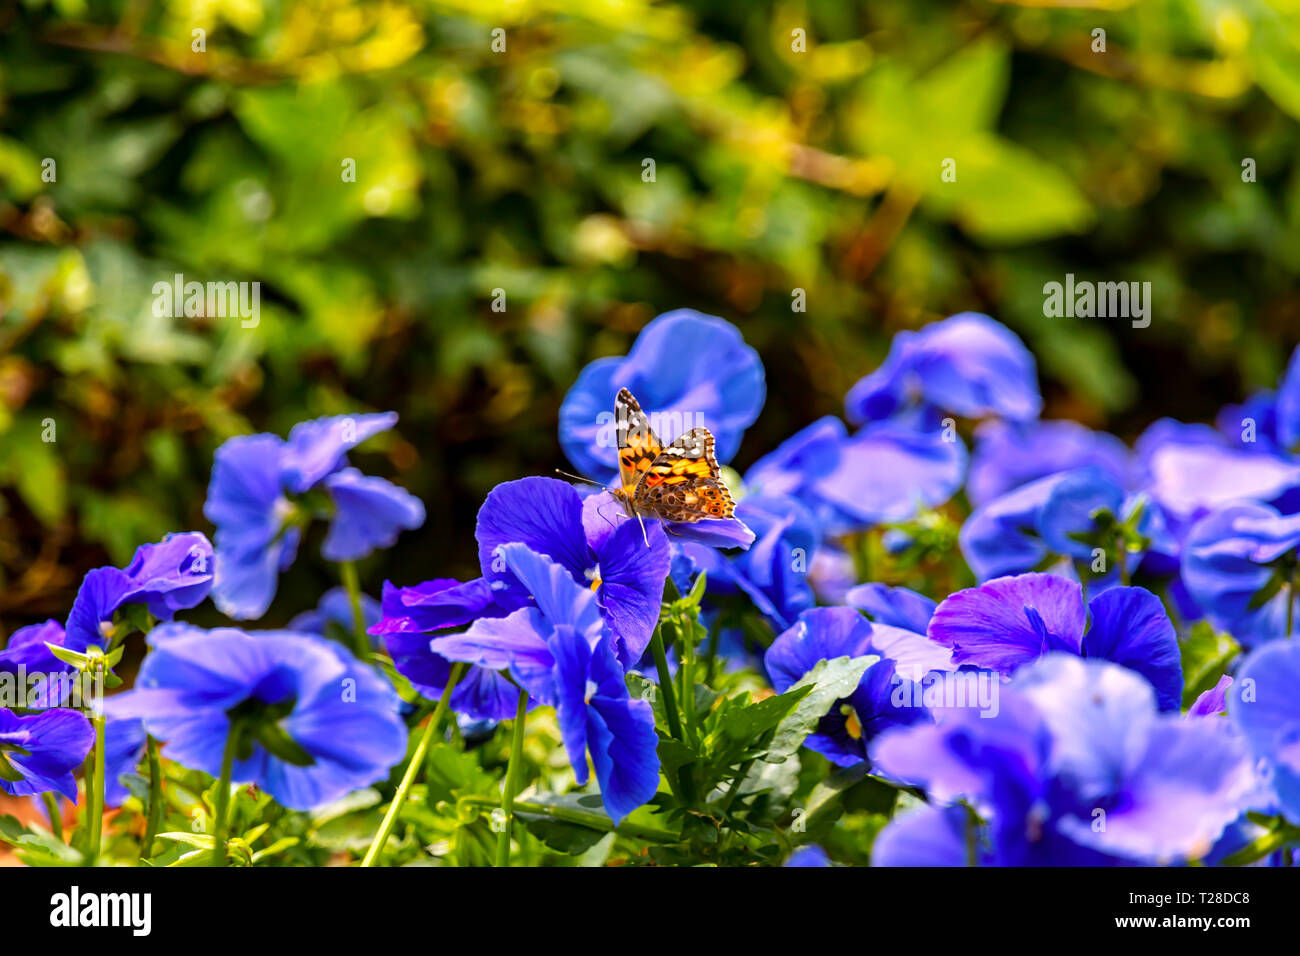 Butterfly Vanessa cardui seduto su un blu pansy flower close-up su uno sfondo sfocato Foto Stock